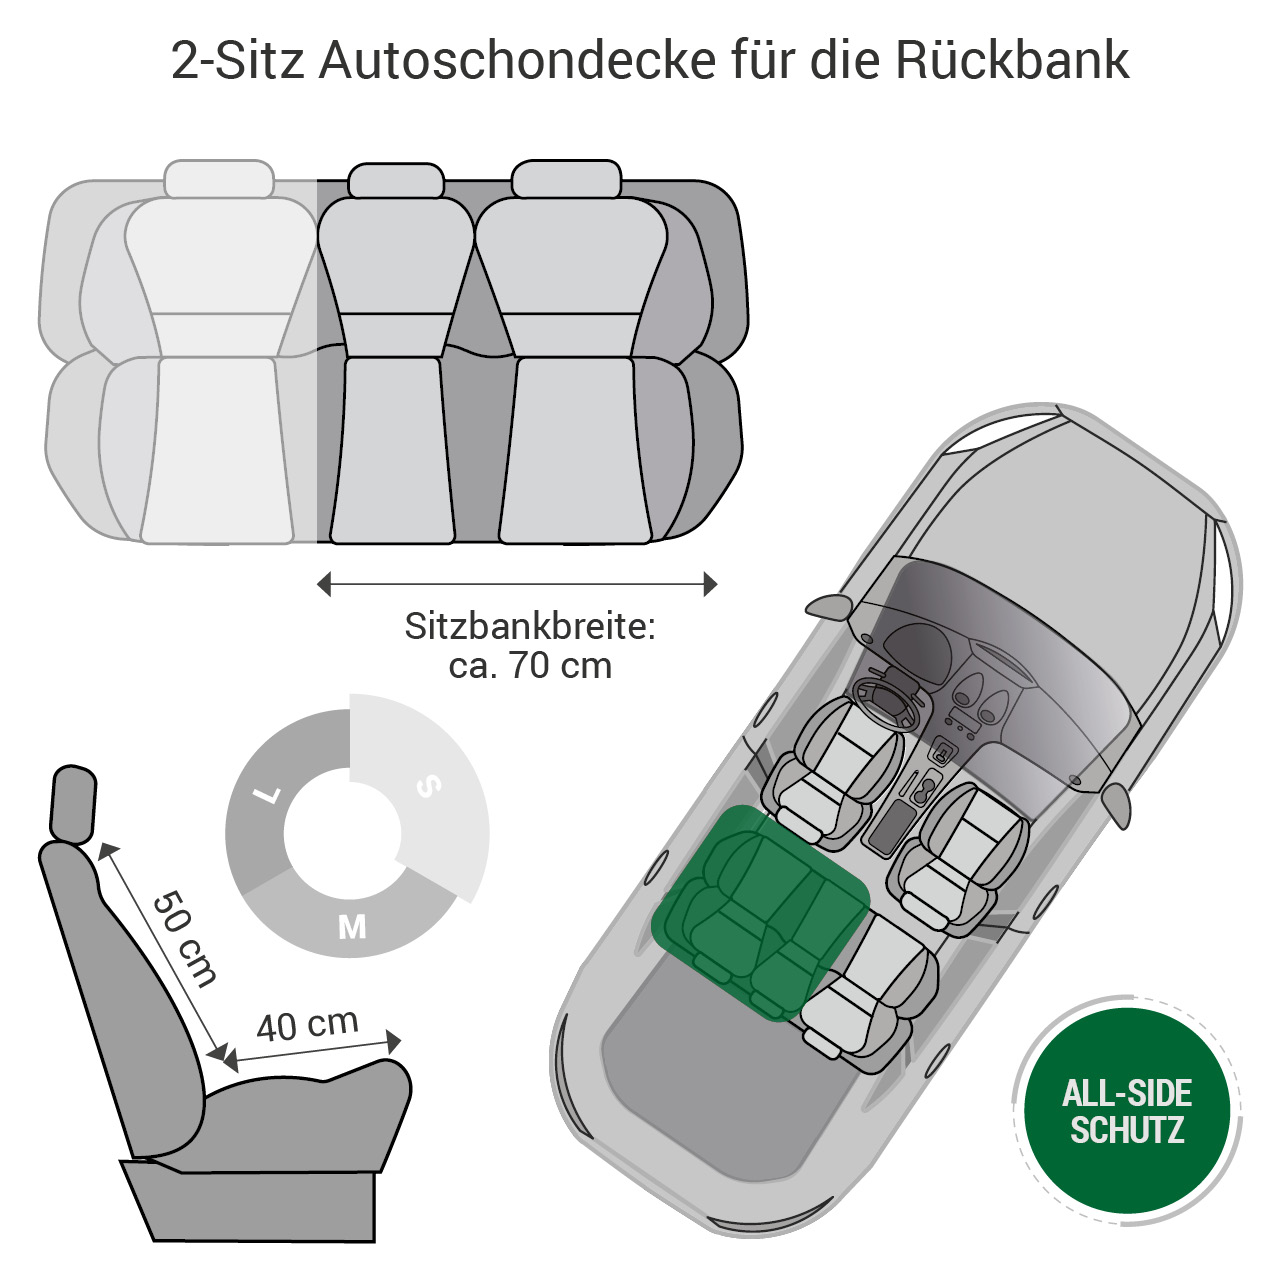 Doctor Bark - Autoschondecke für Hunde - Rückbank 2-Sitz Gr. S - grau